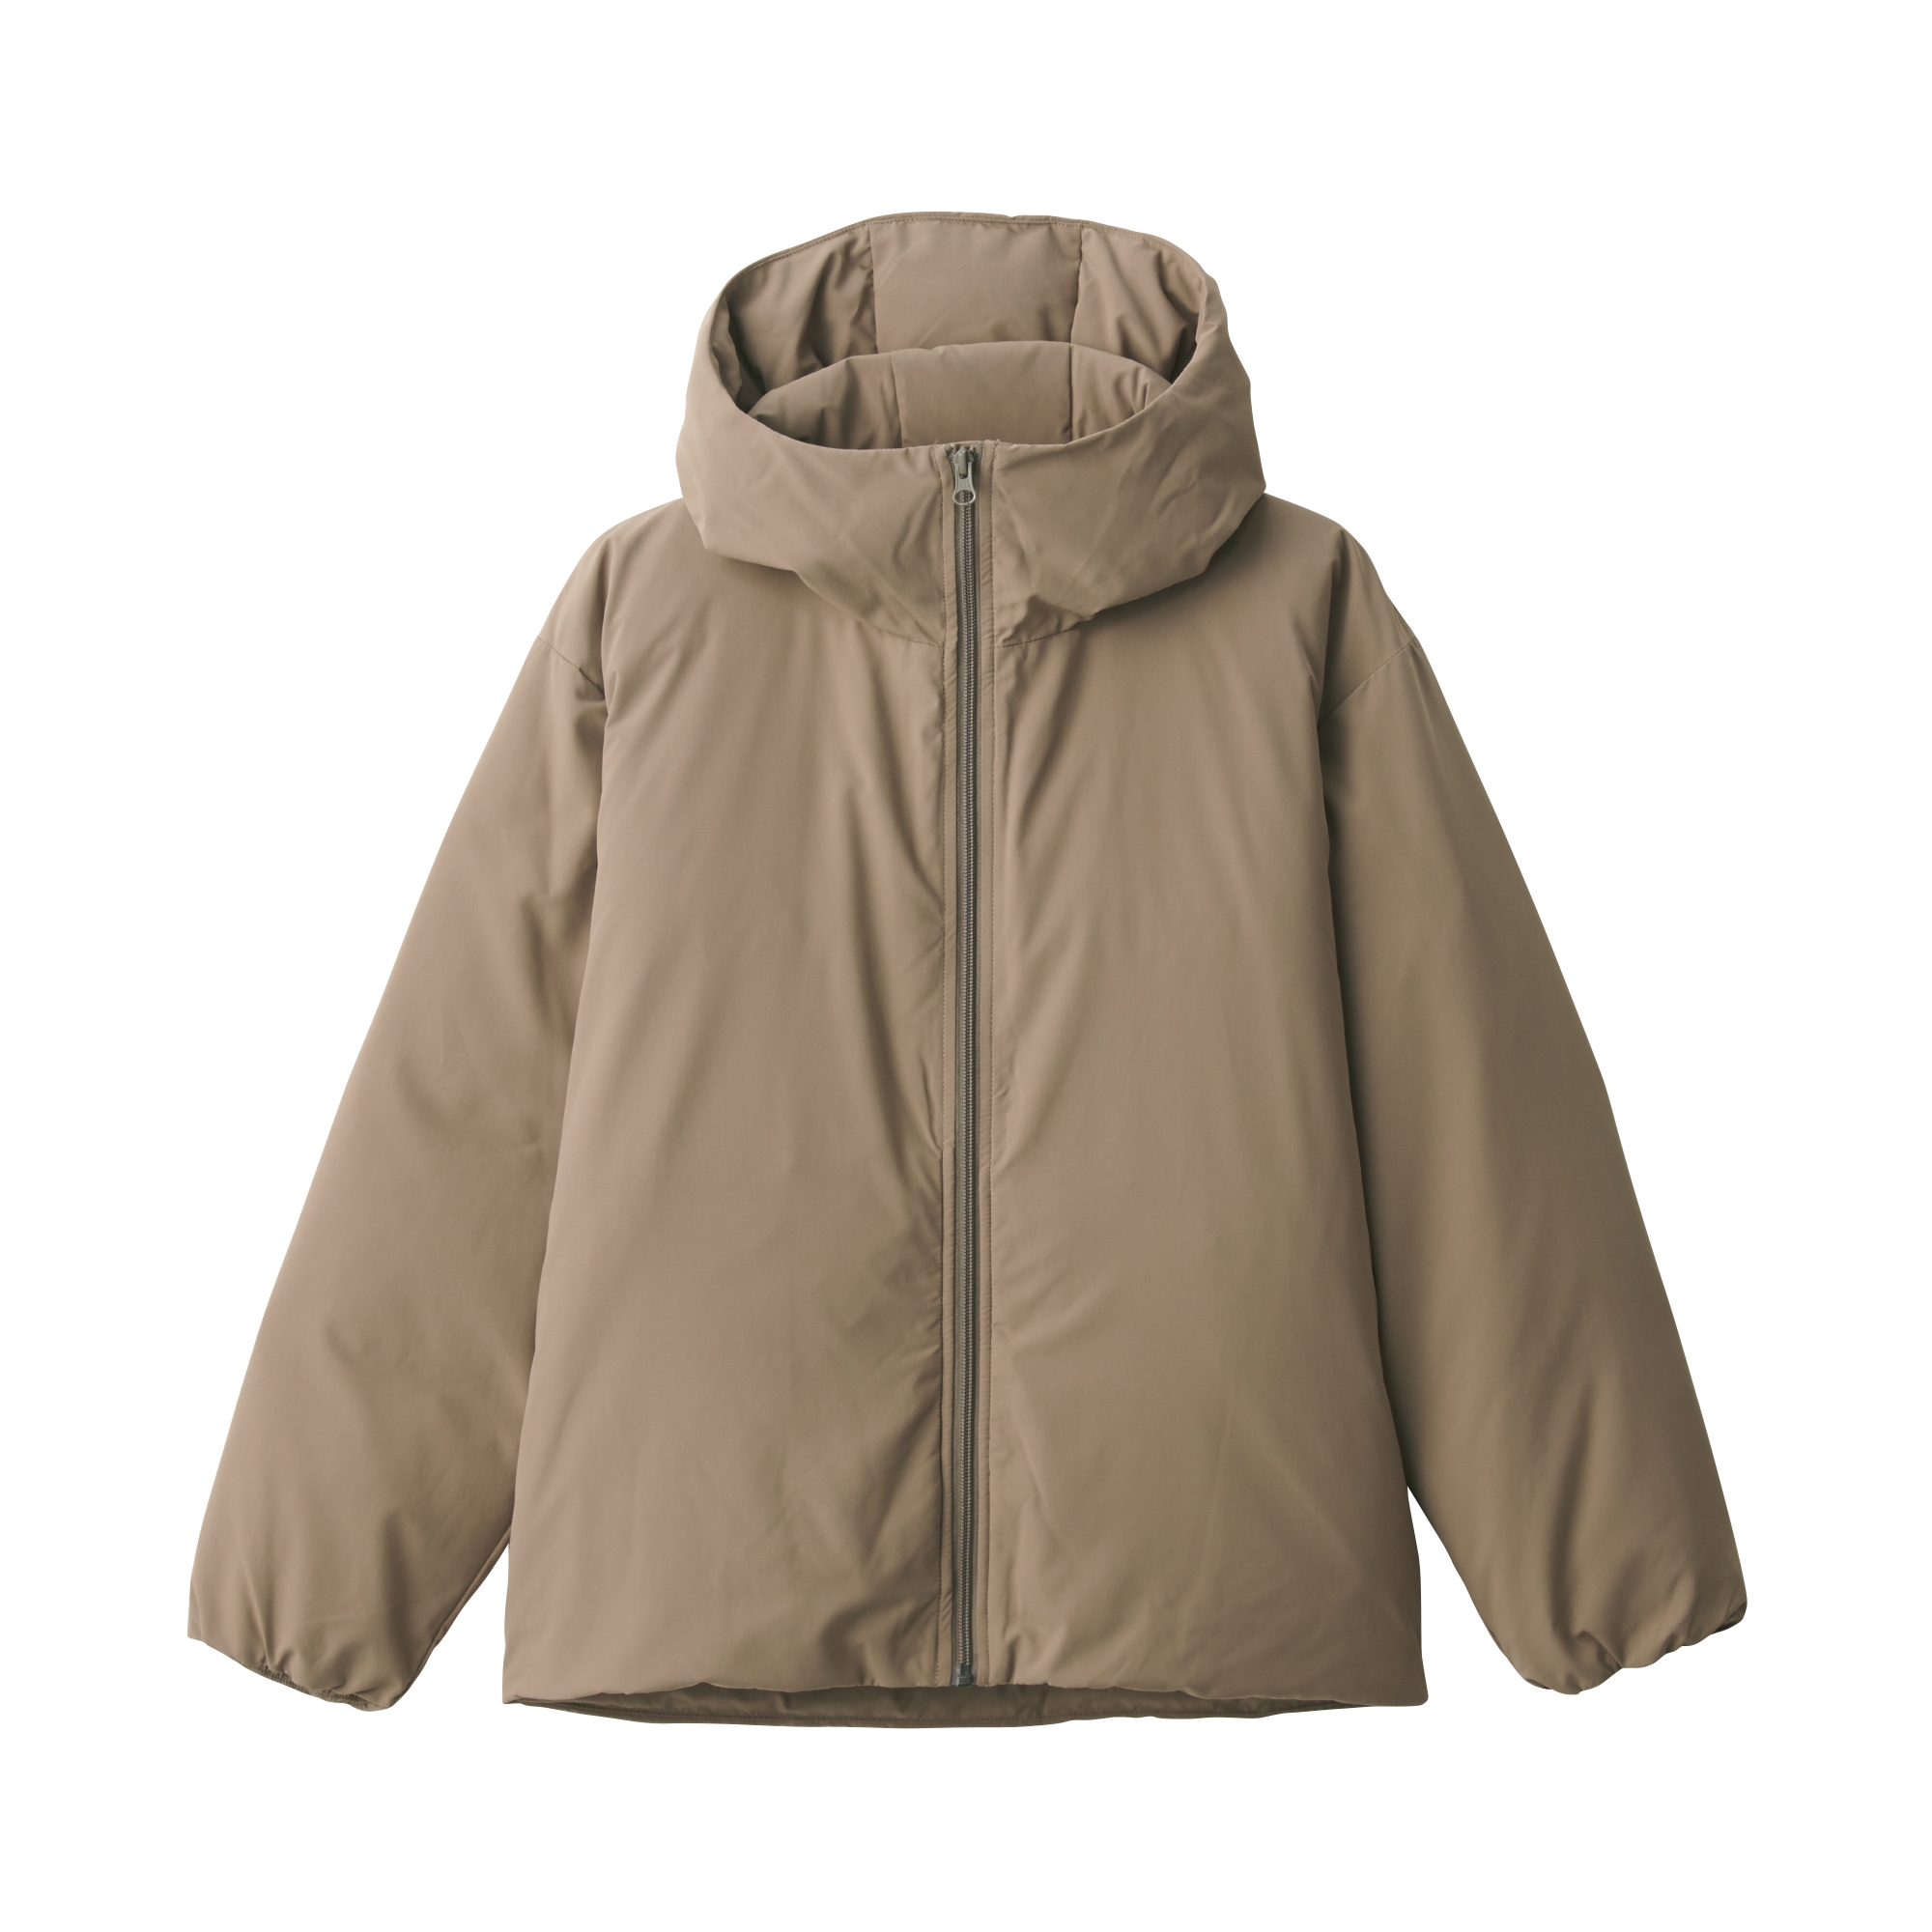 How to Choose a Waterproof Jacket | Alpkit